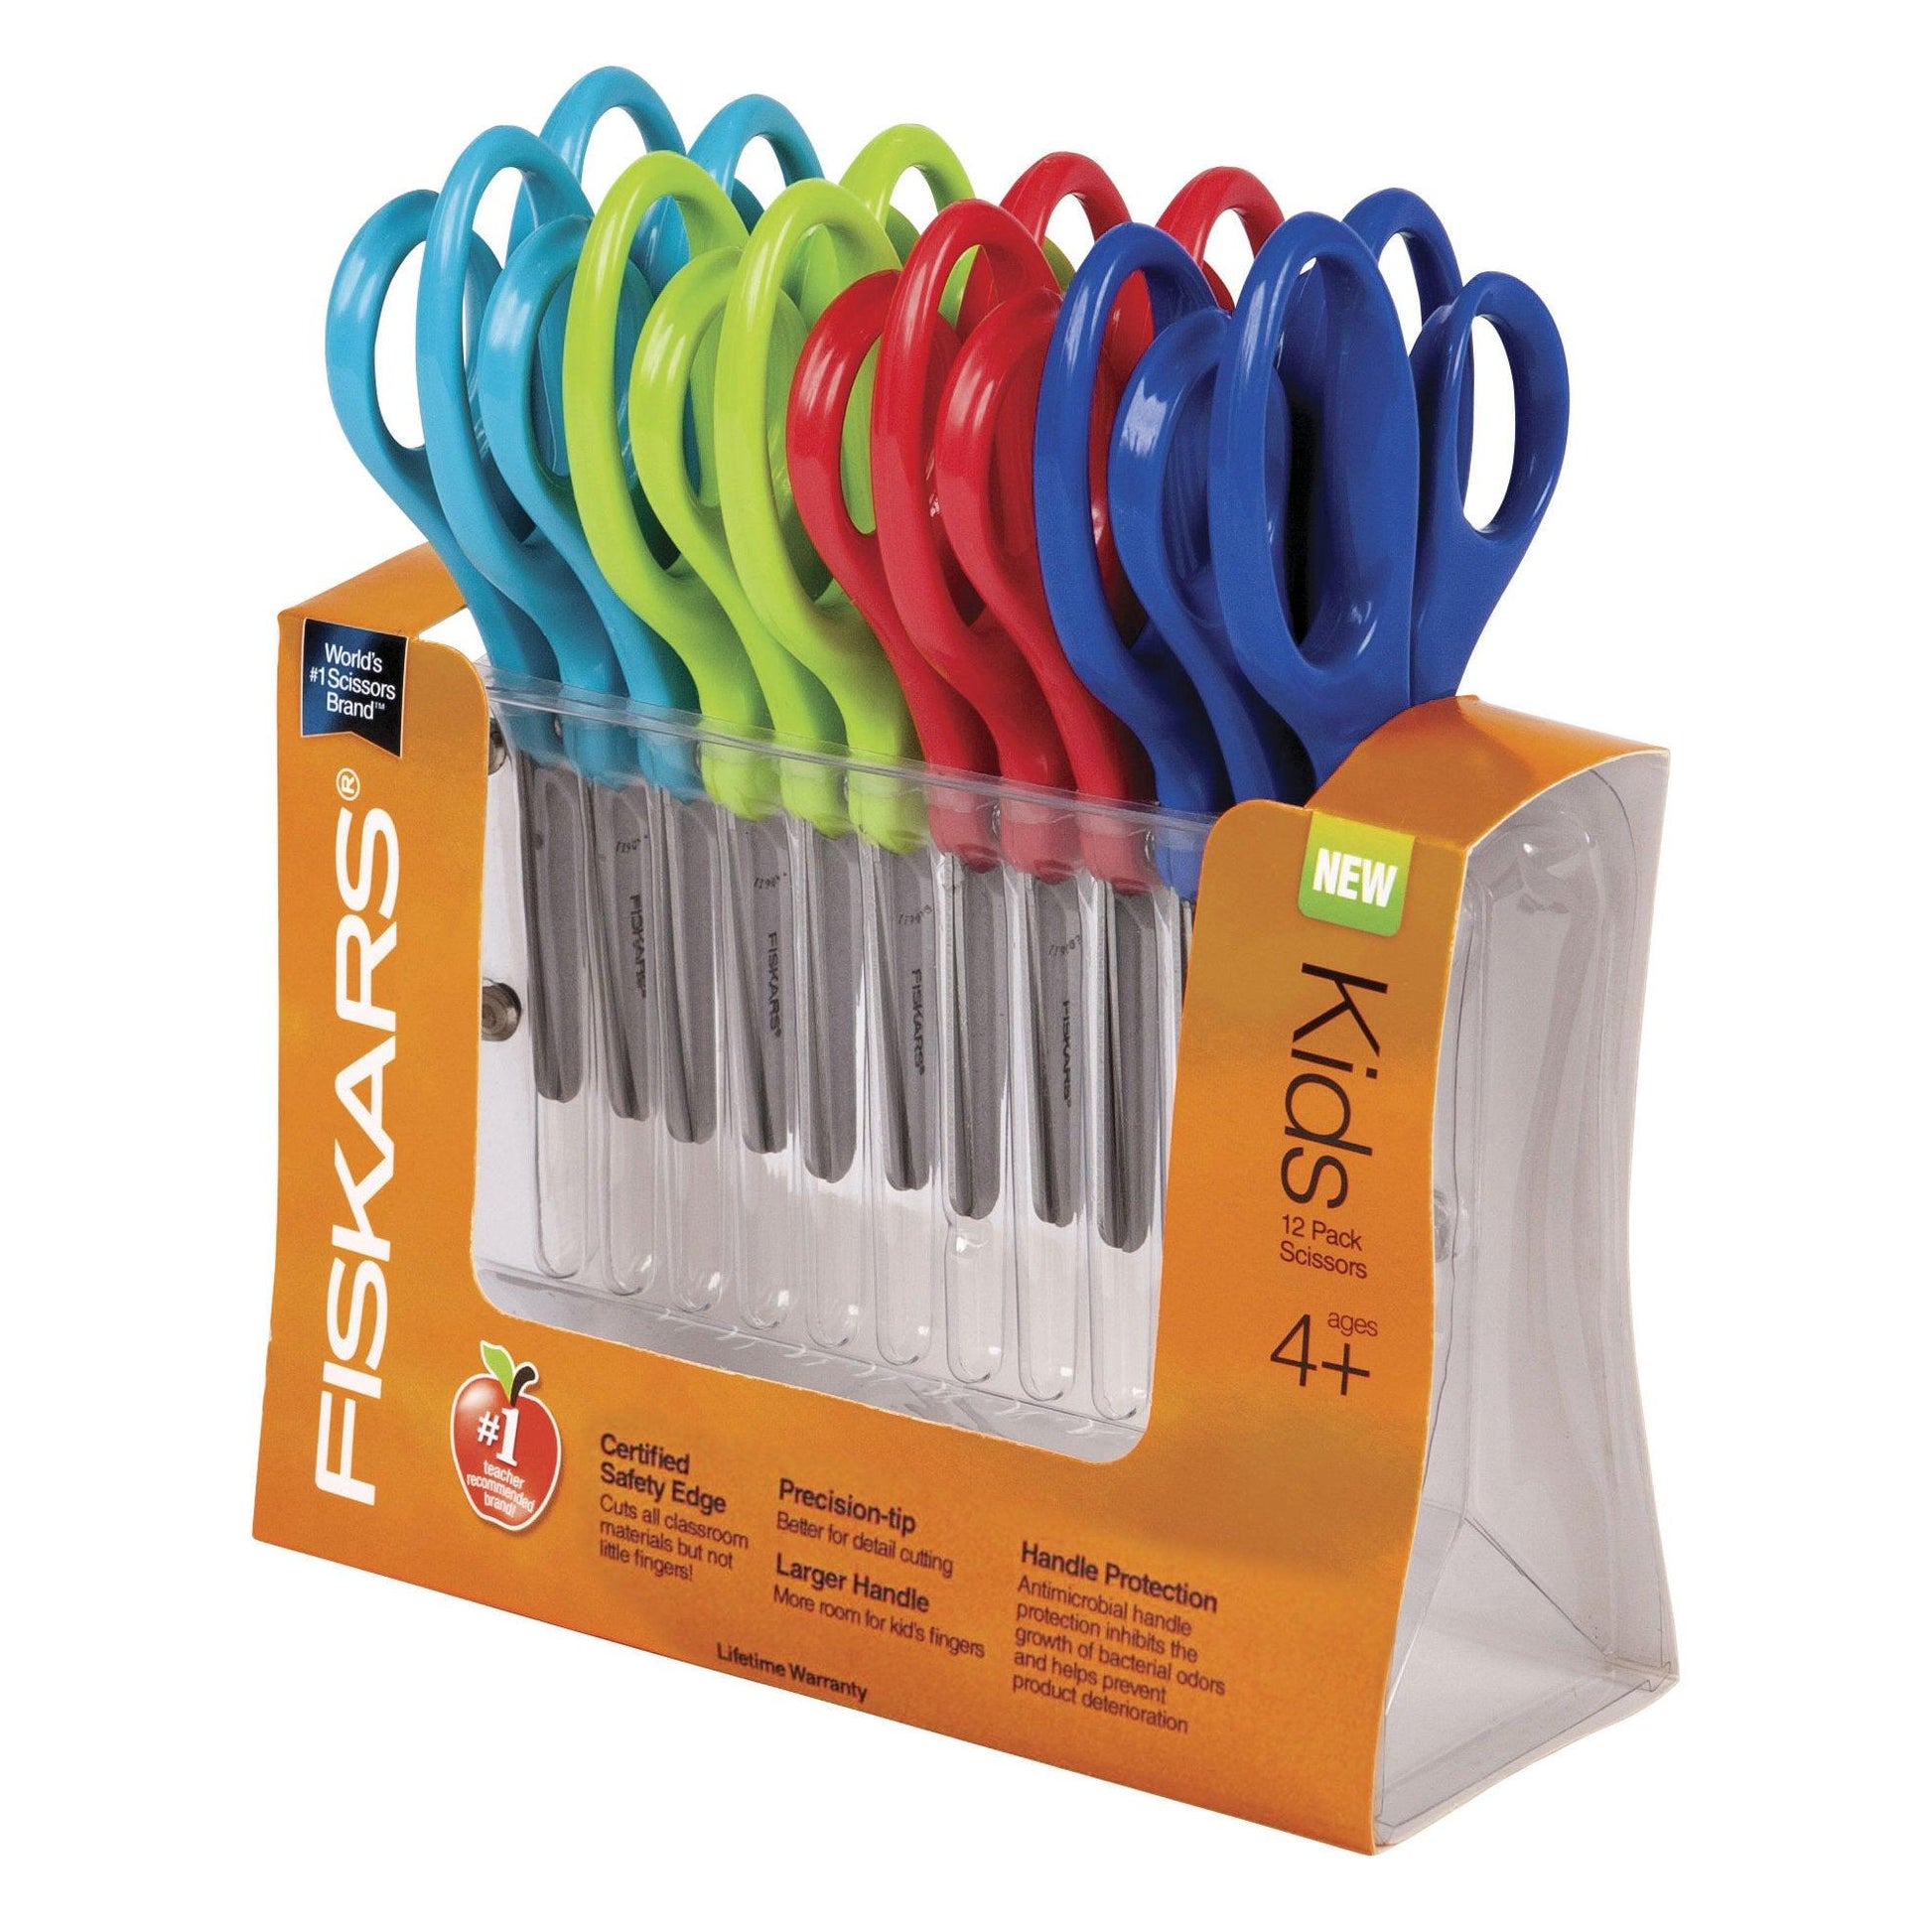 Pointed-tip Kids Scissors Classpack, 5", Assorted Colors, Pack of 12 - Loomini